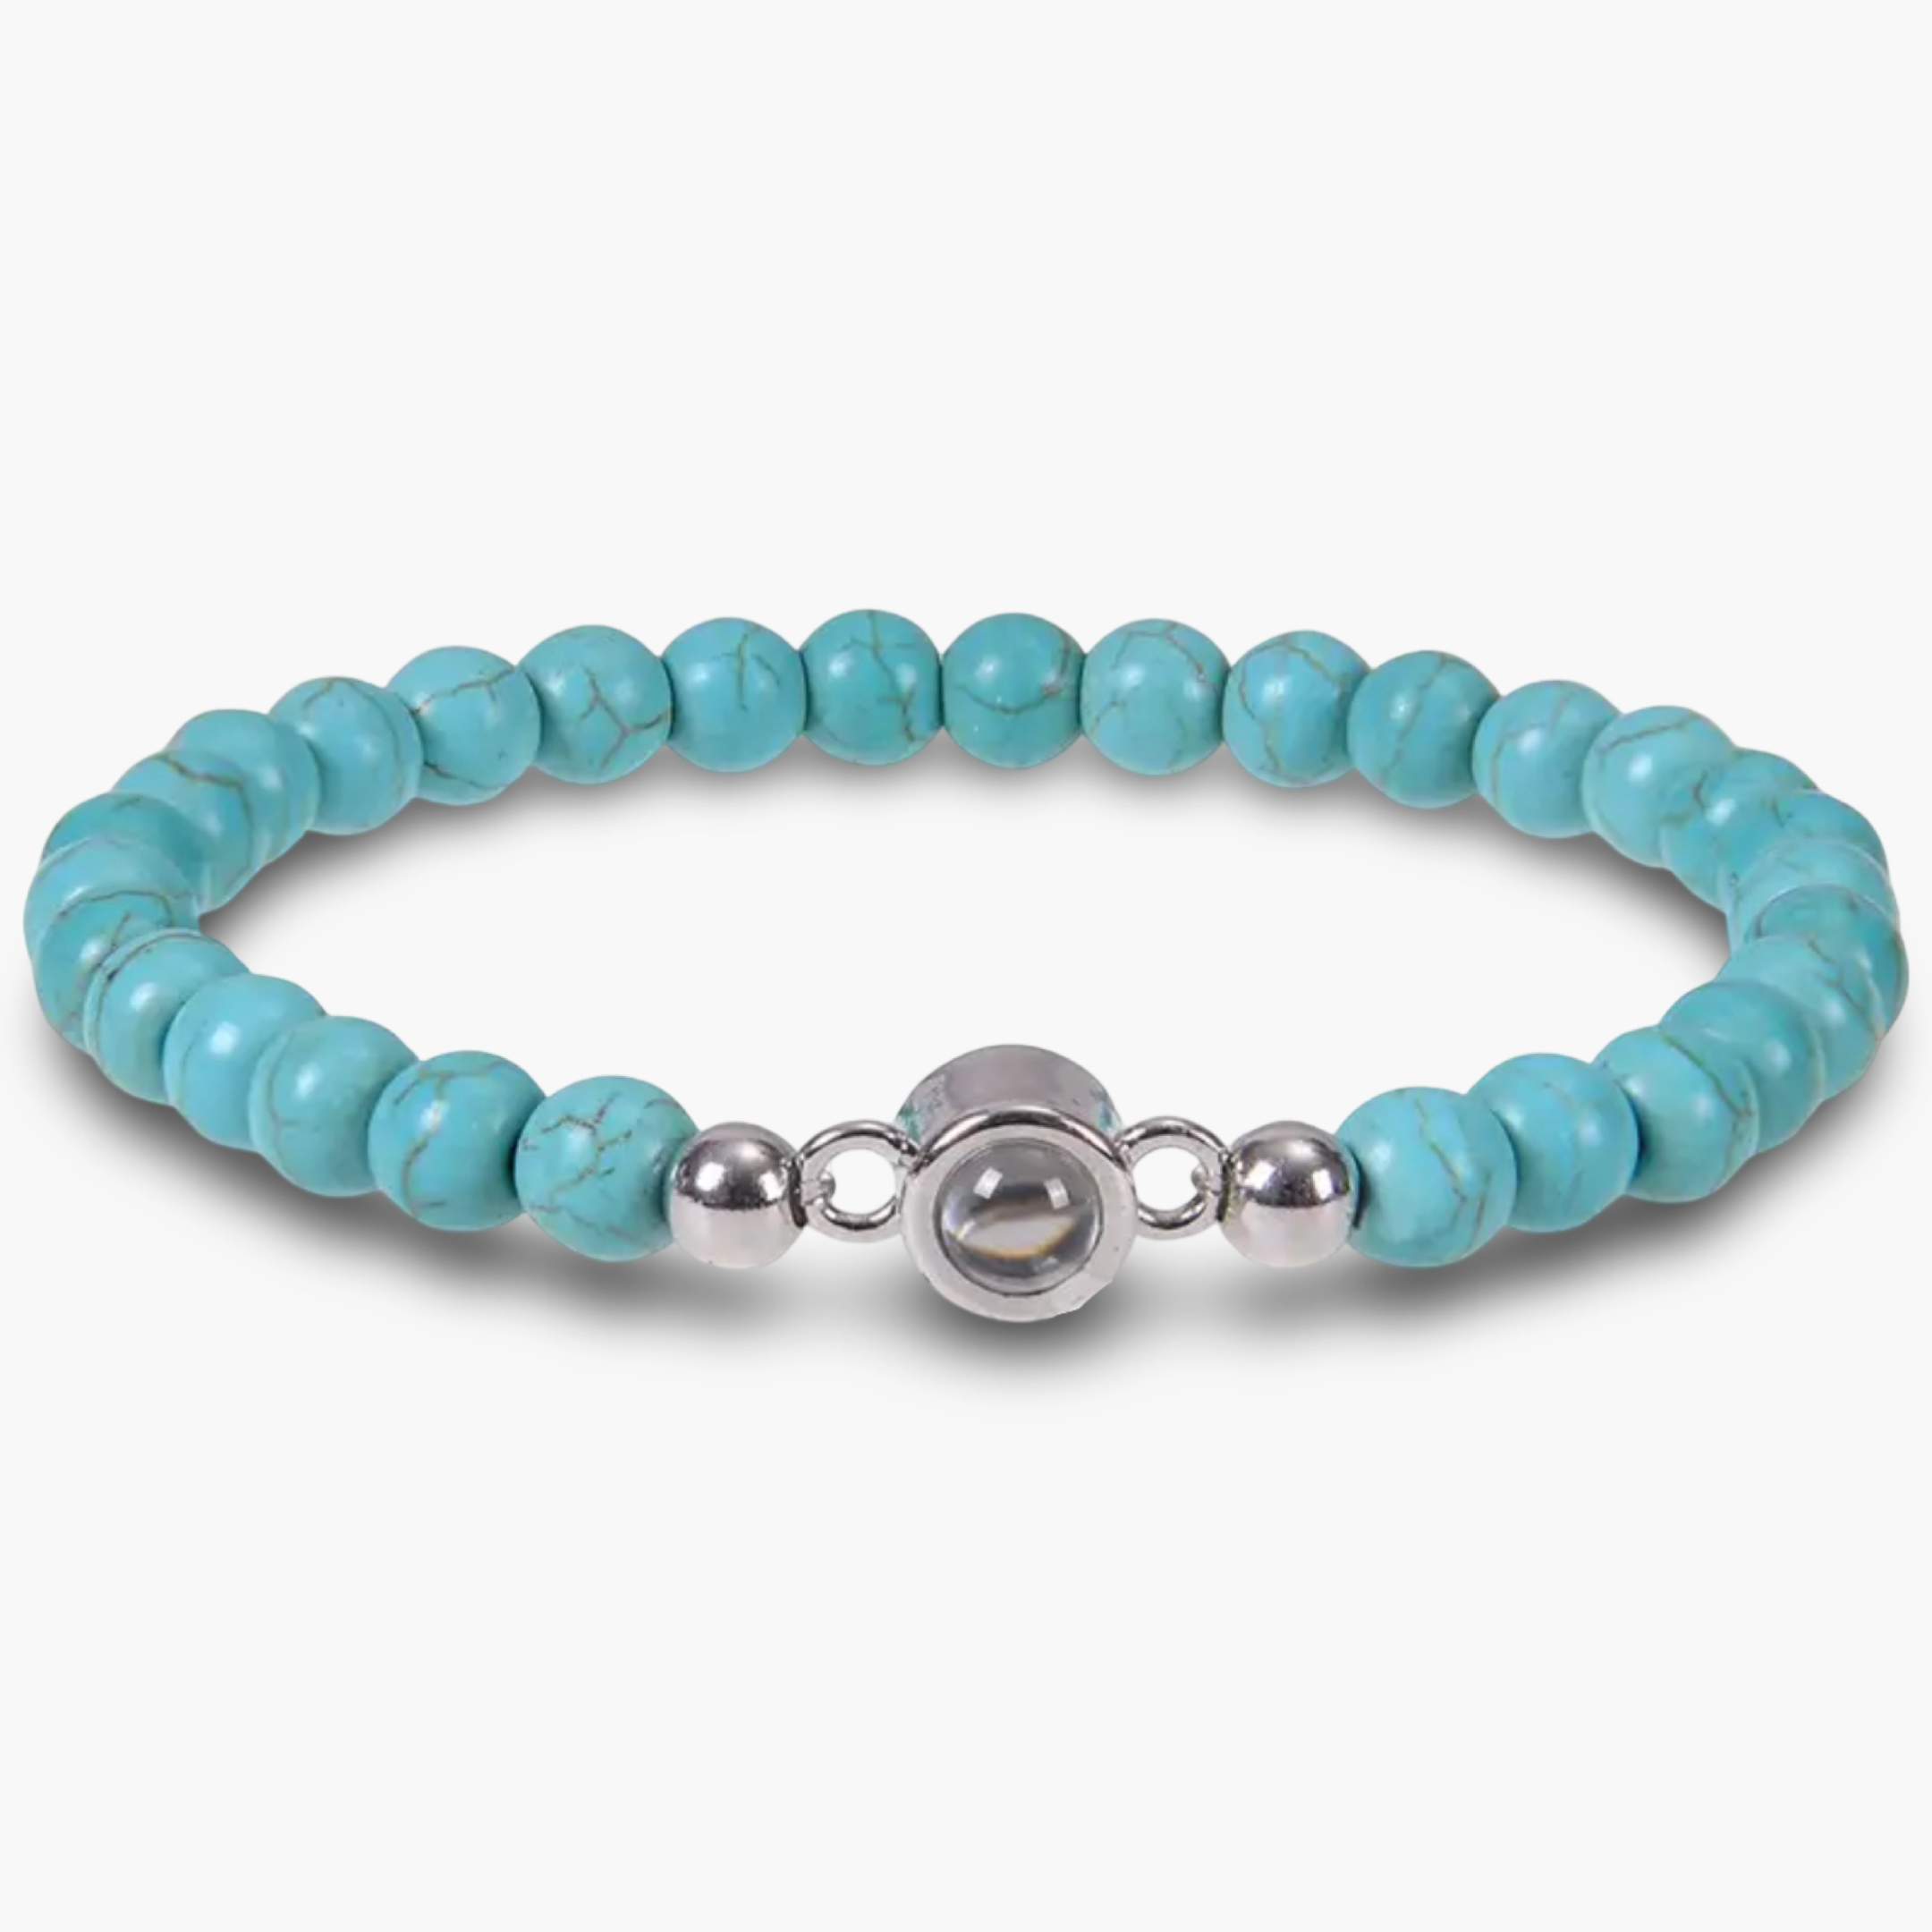 Personalized Beads Stone Bracelet